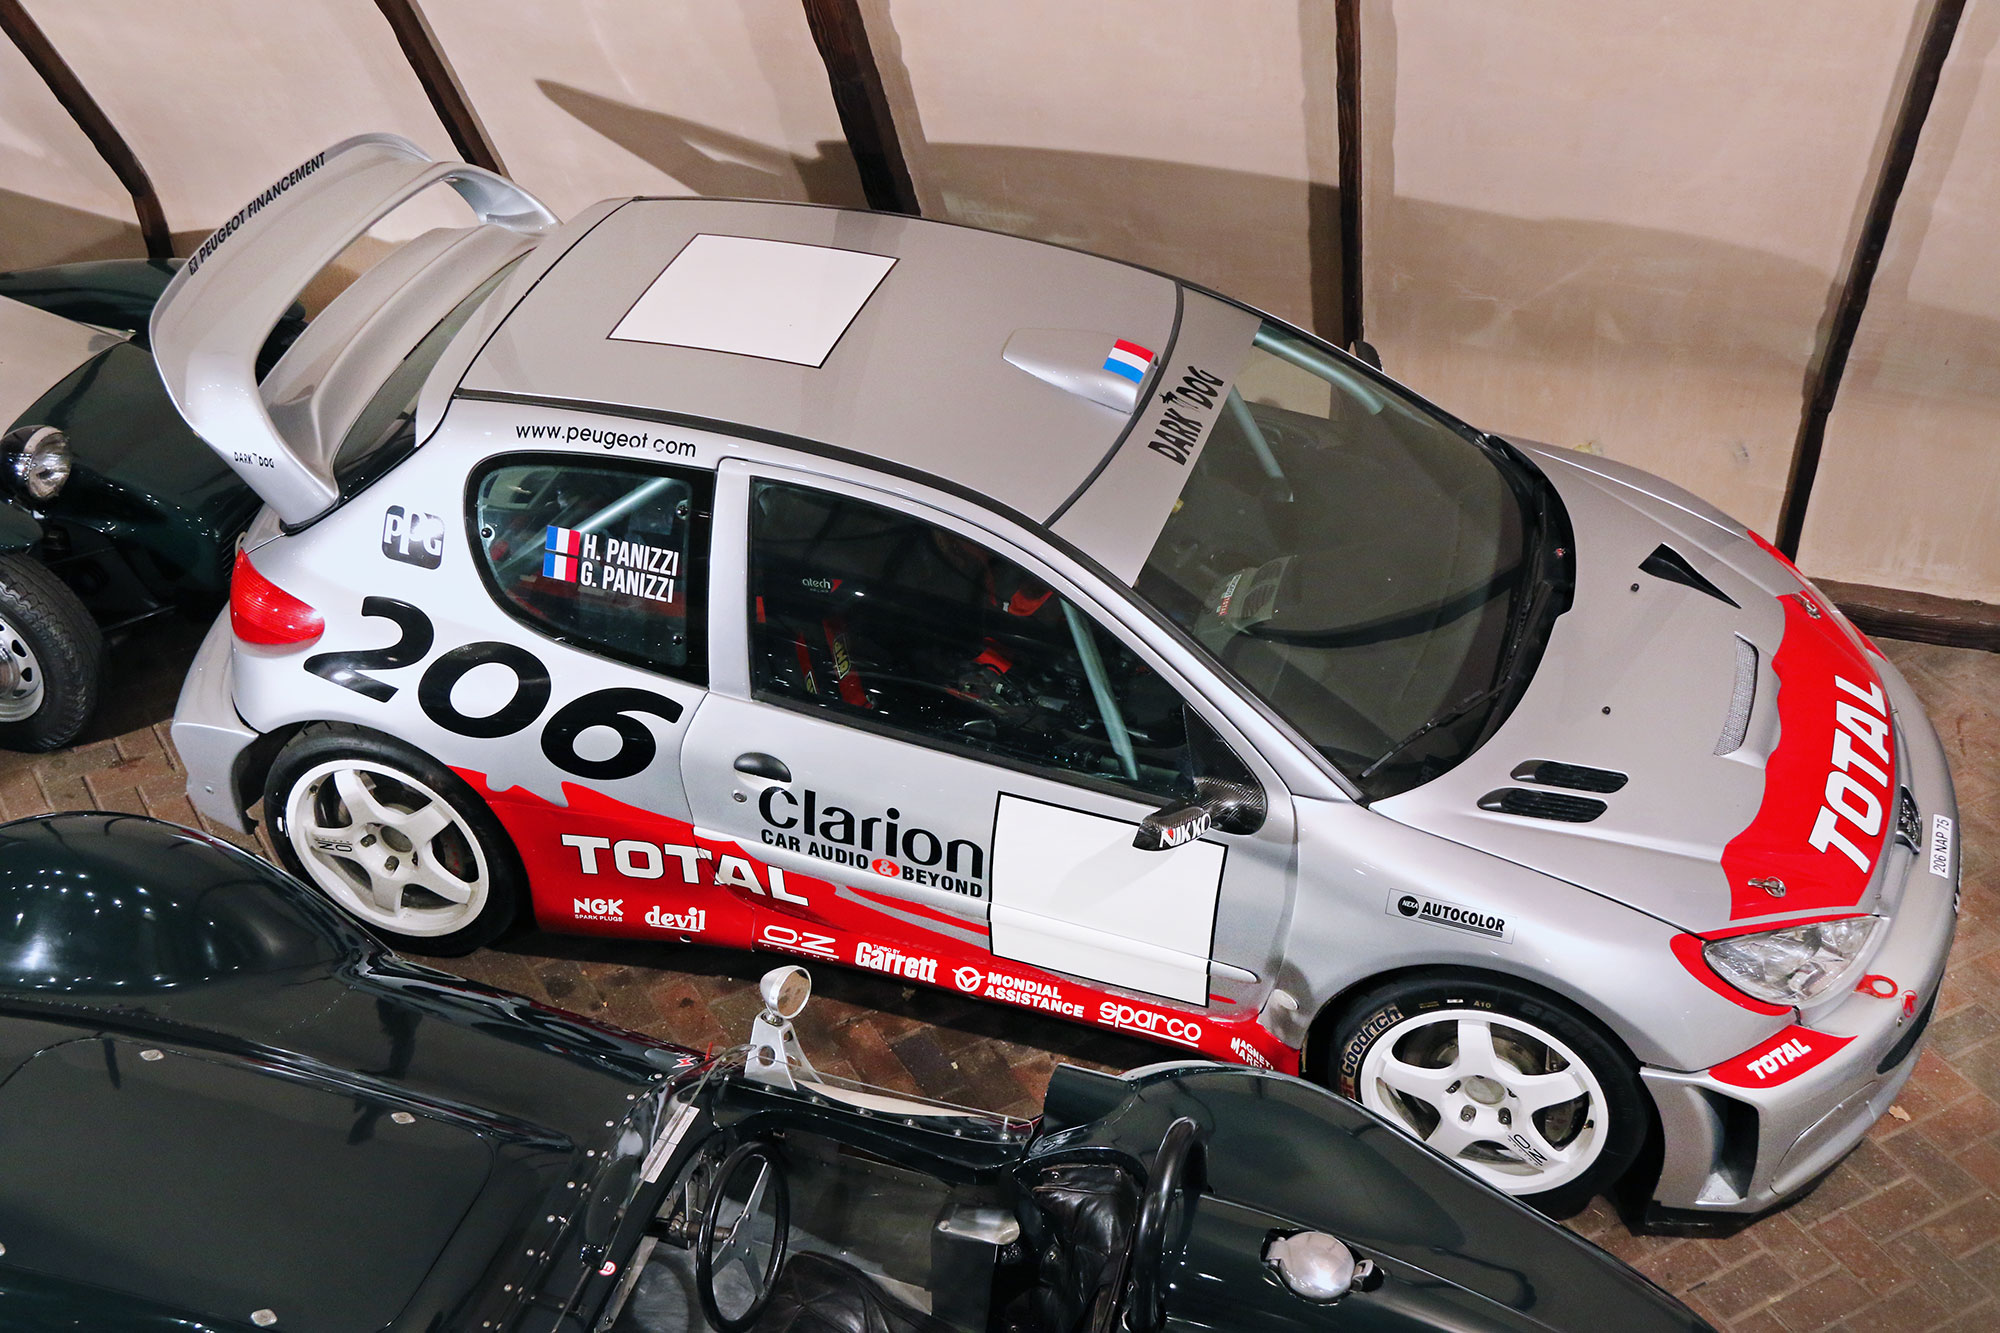 Peugeot 206 WRC (2002) - Epic Games Store